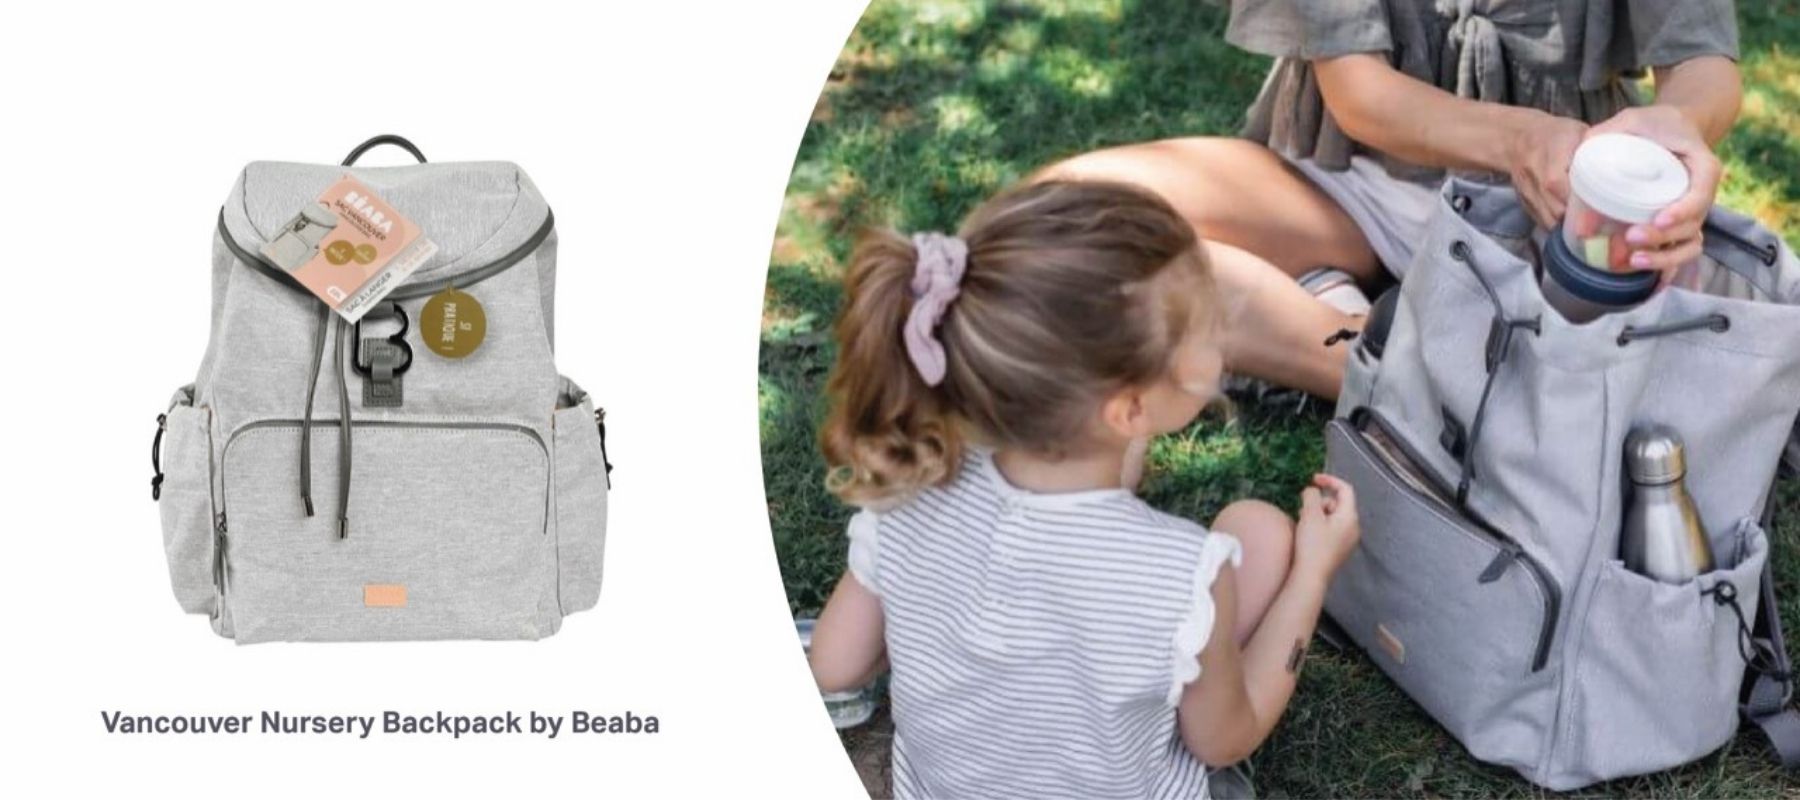 Vancouver Nursery Backpack by Beaba